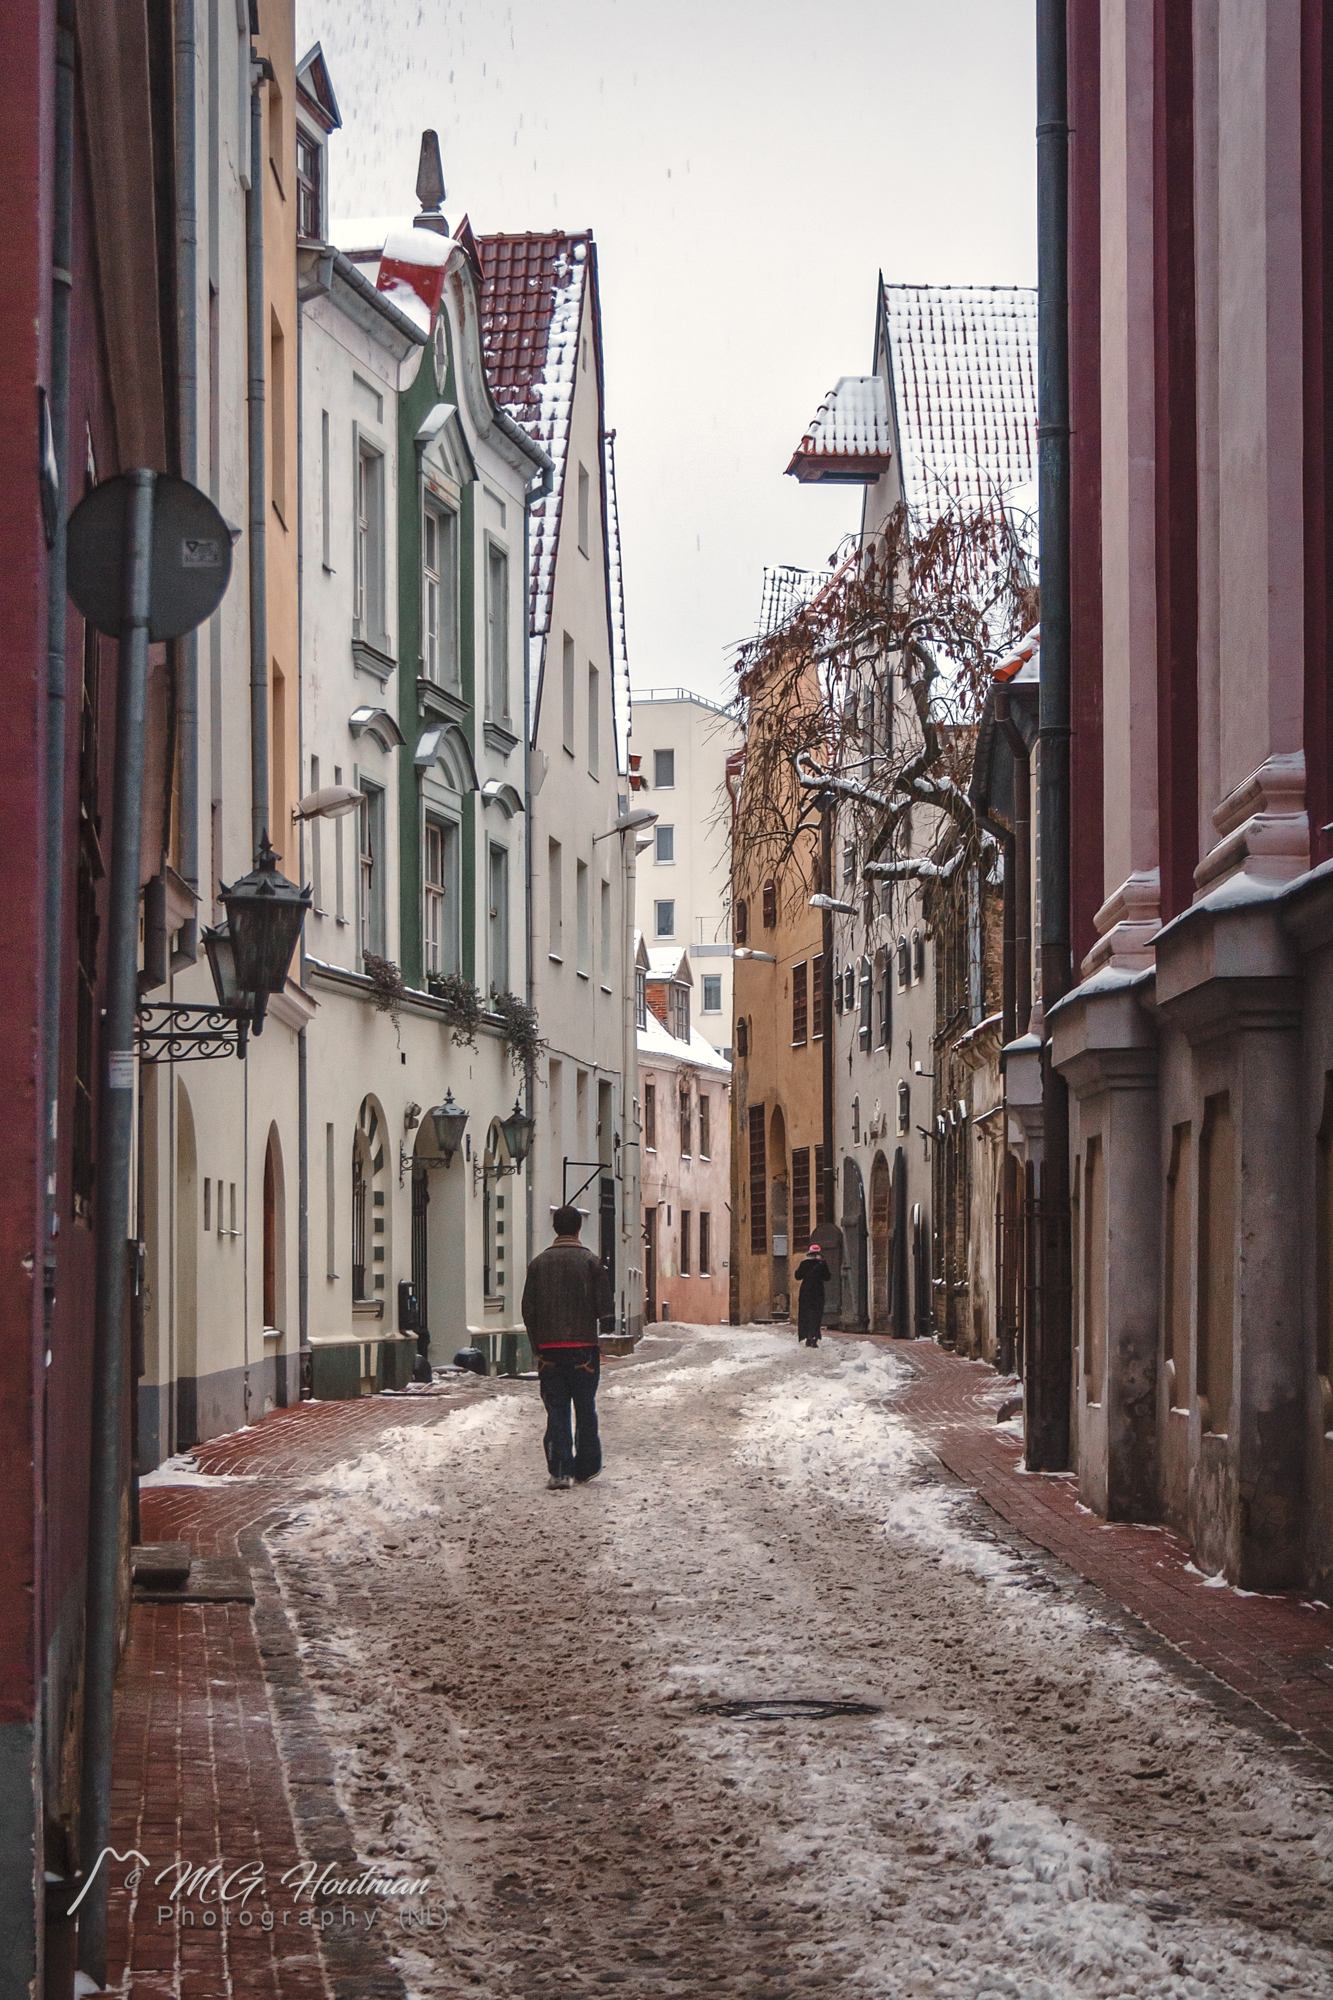 Riga - Letland